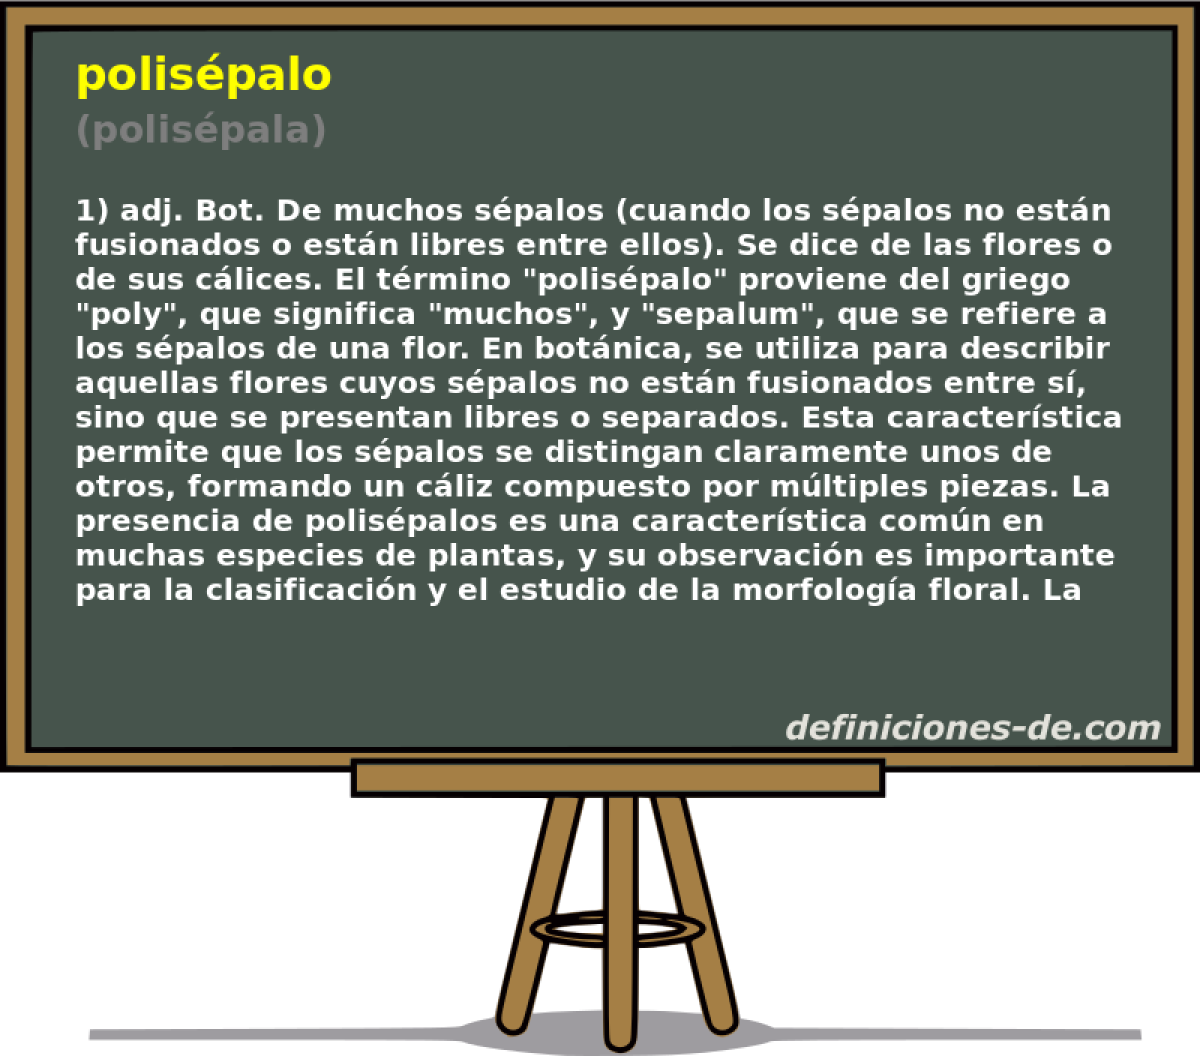 polispalo (polispala)